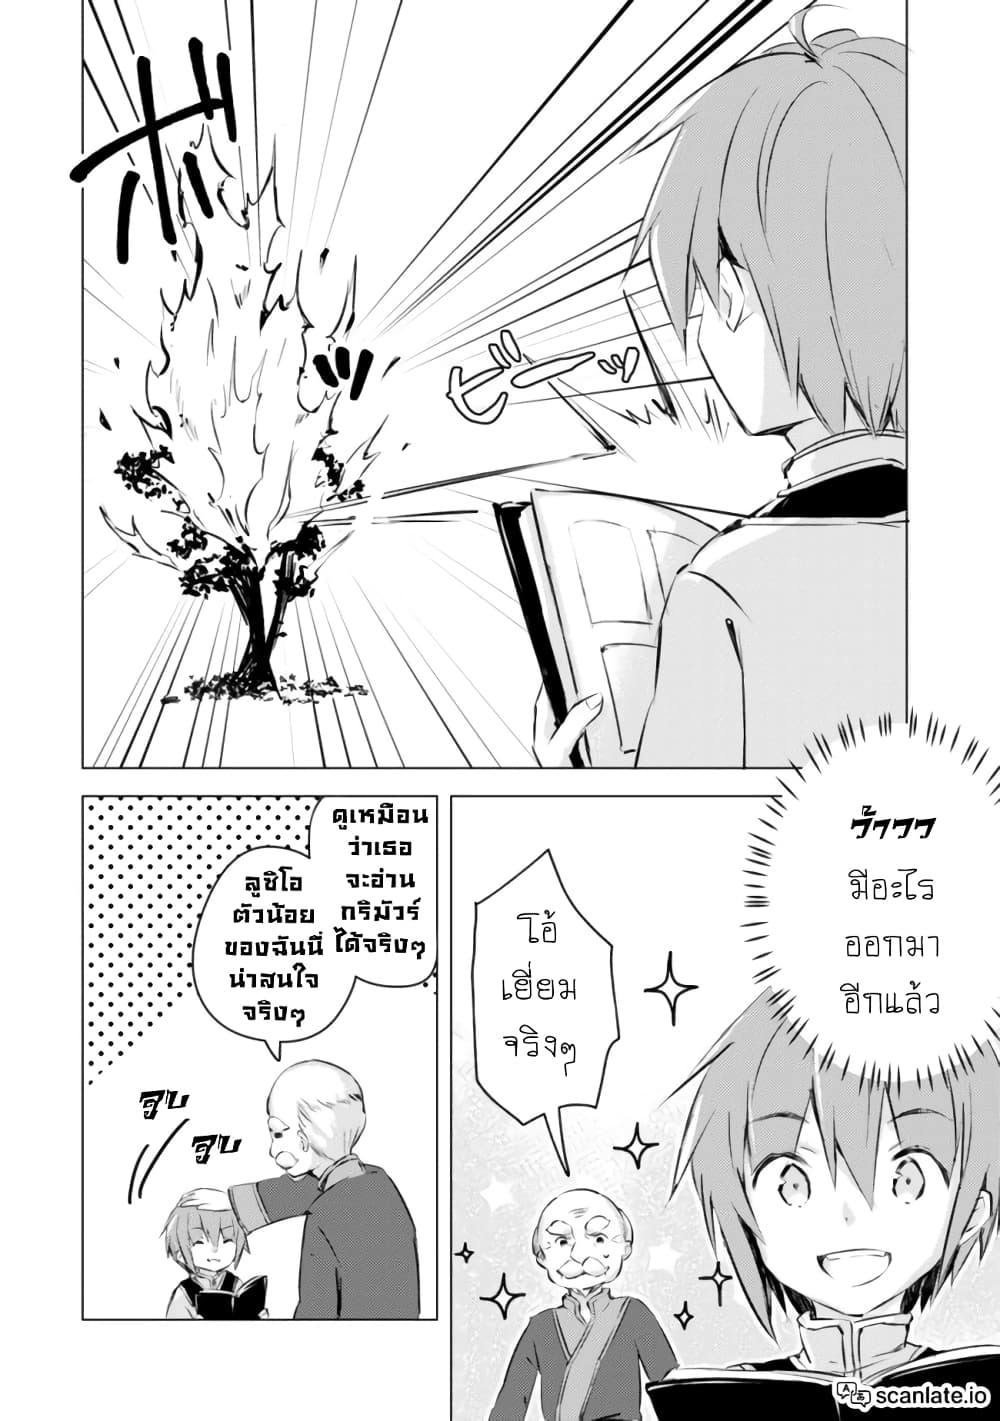 Manga wo Yomeru Ore ga Sekai Saikyou ตอนที่ 1 (14)